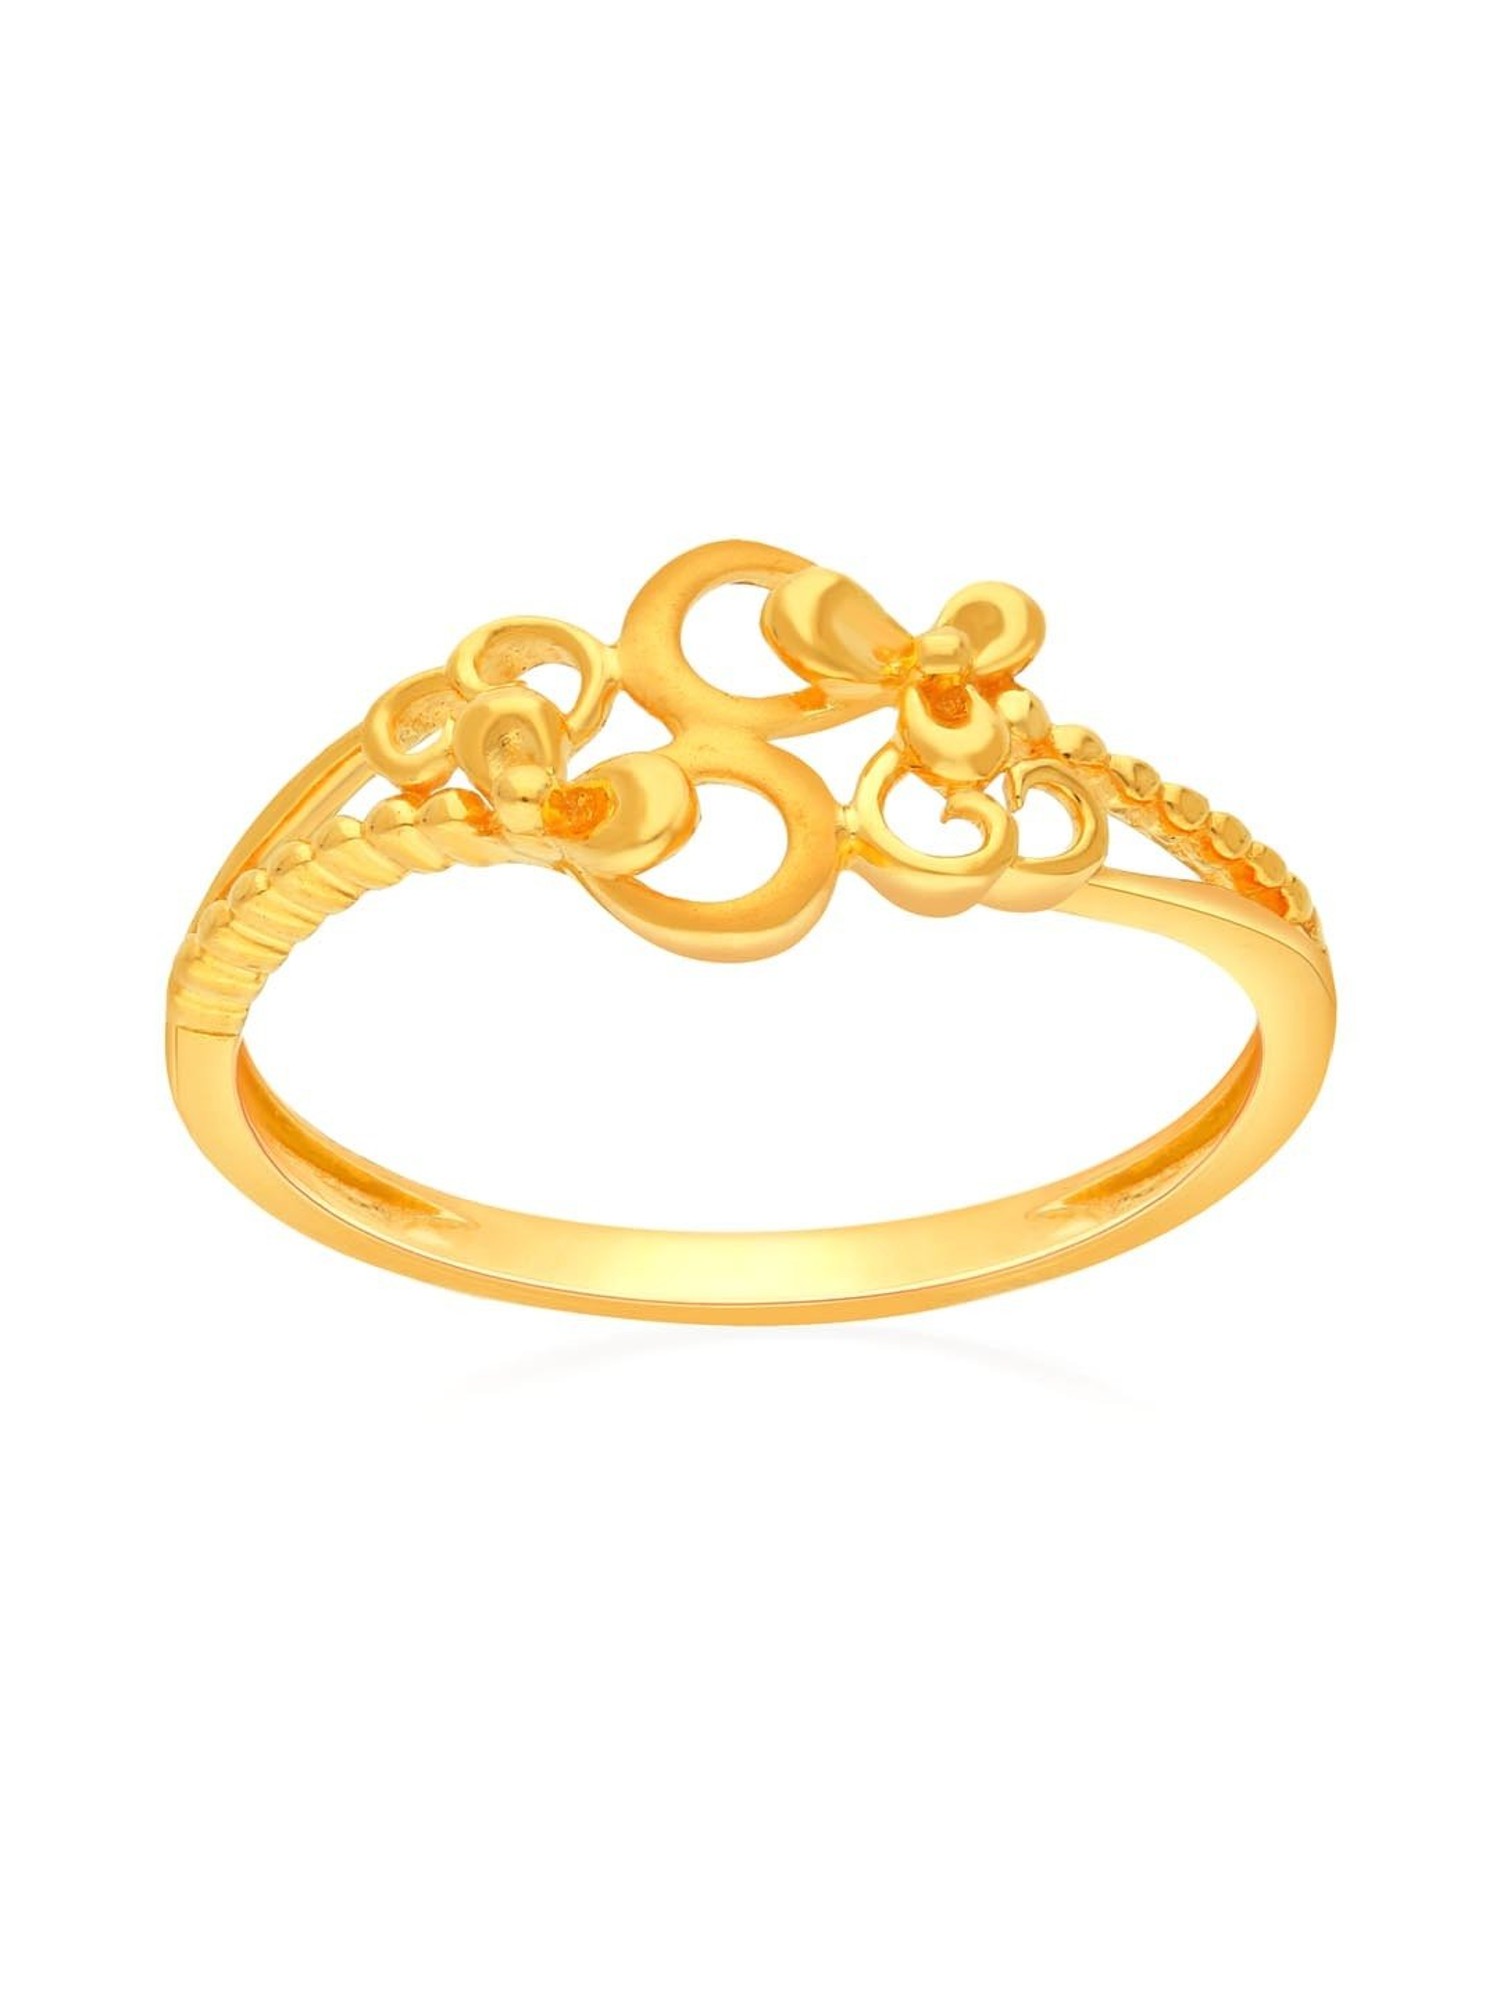 Buy Malabar Gold Ring FRDZL22421 for Men Online | Malabar Gold & Diamonds